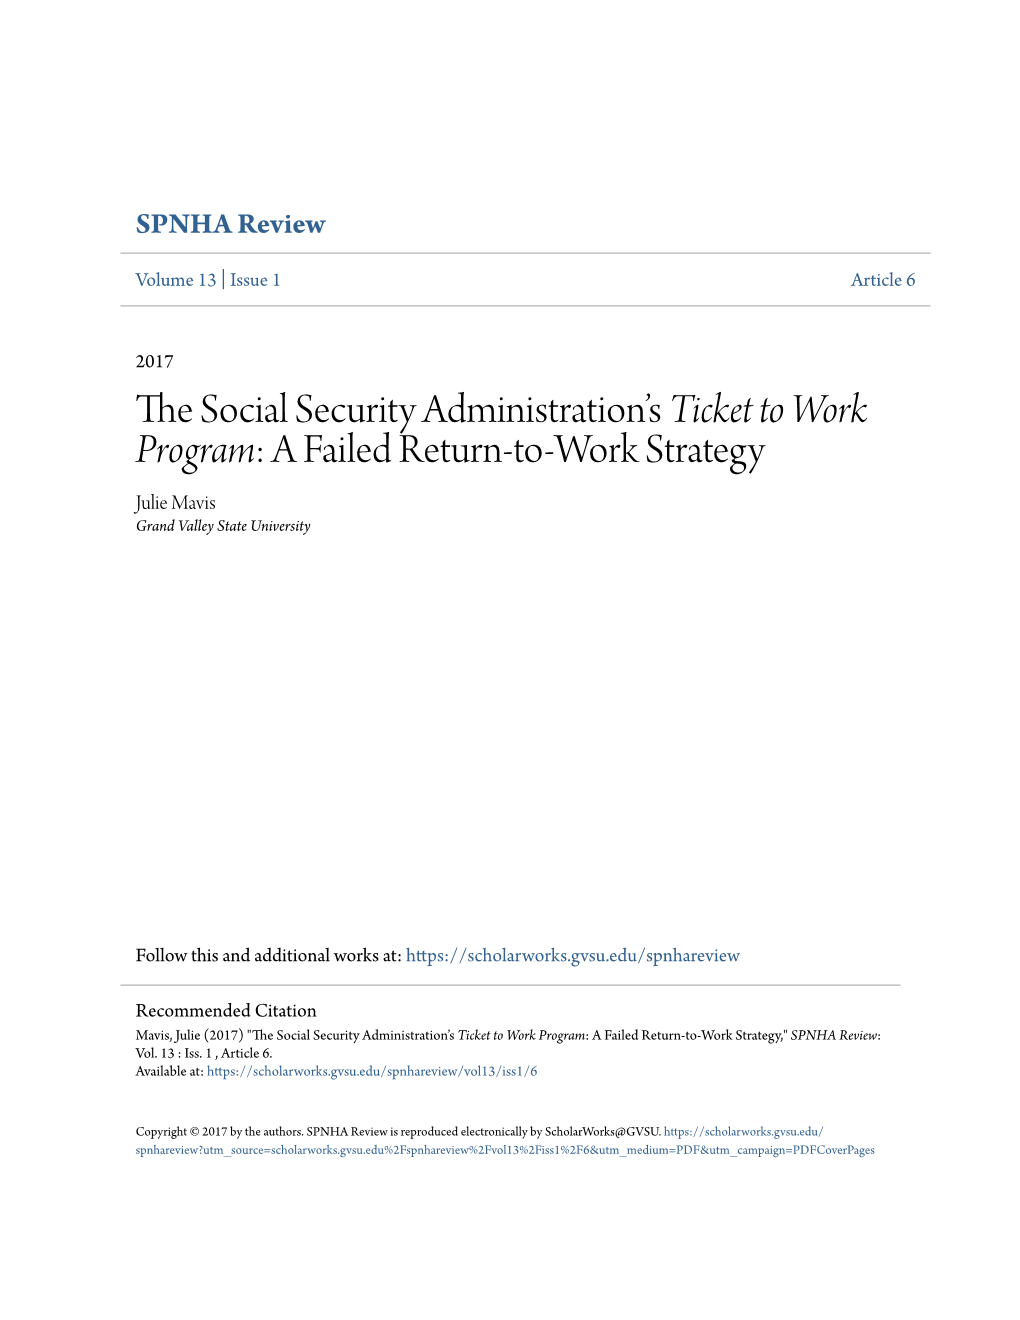 The Social Security Administration's &lt;I&gt;Ticket to Work Program&lt;/I&gt;